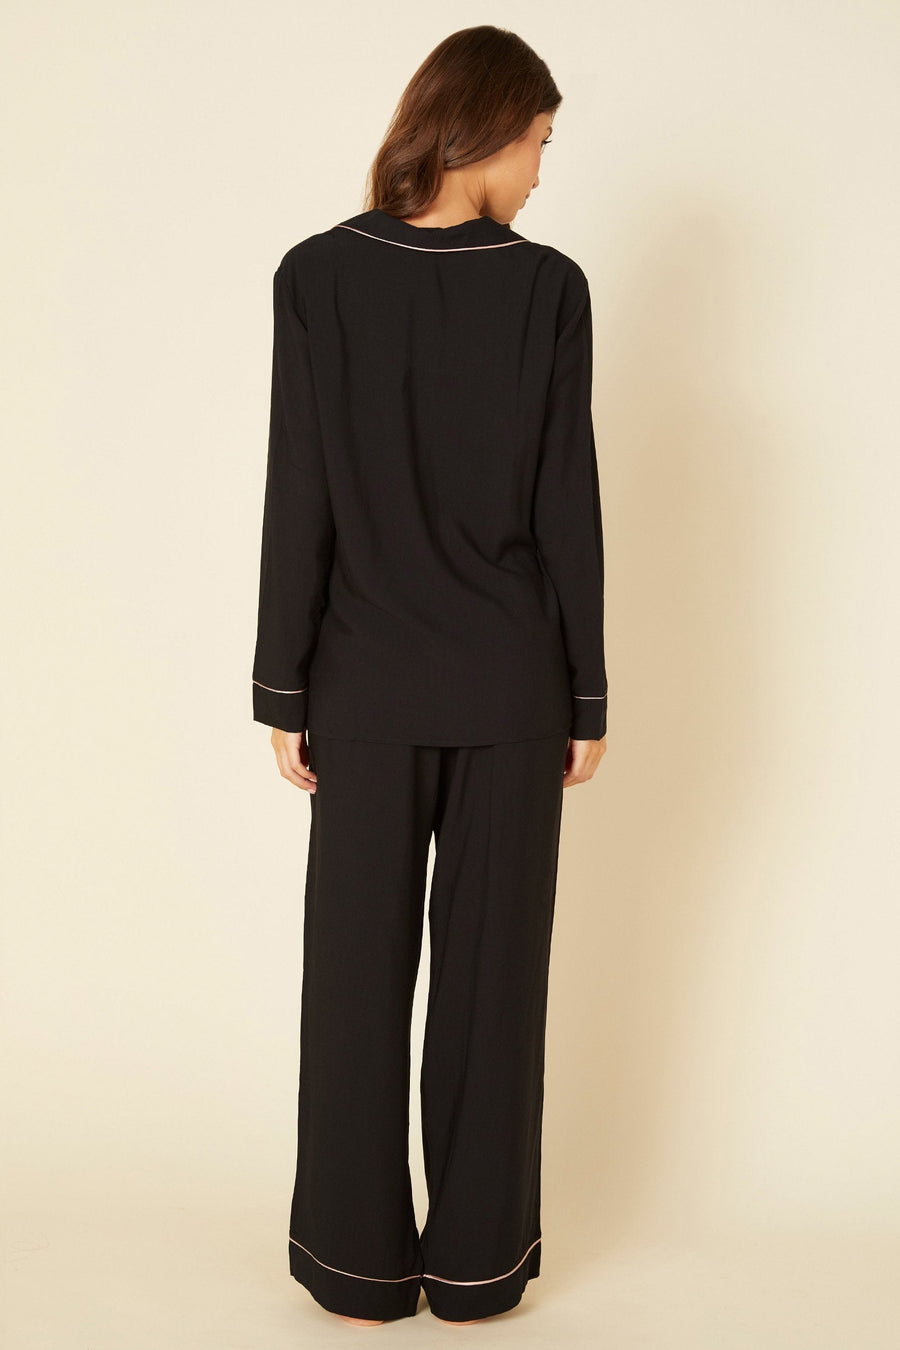 Black Set - Bella Luxe Long Sleeve Top & Pant Pajama Set